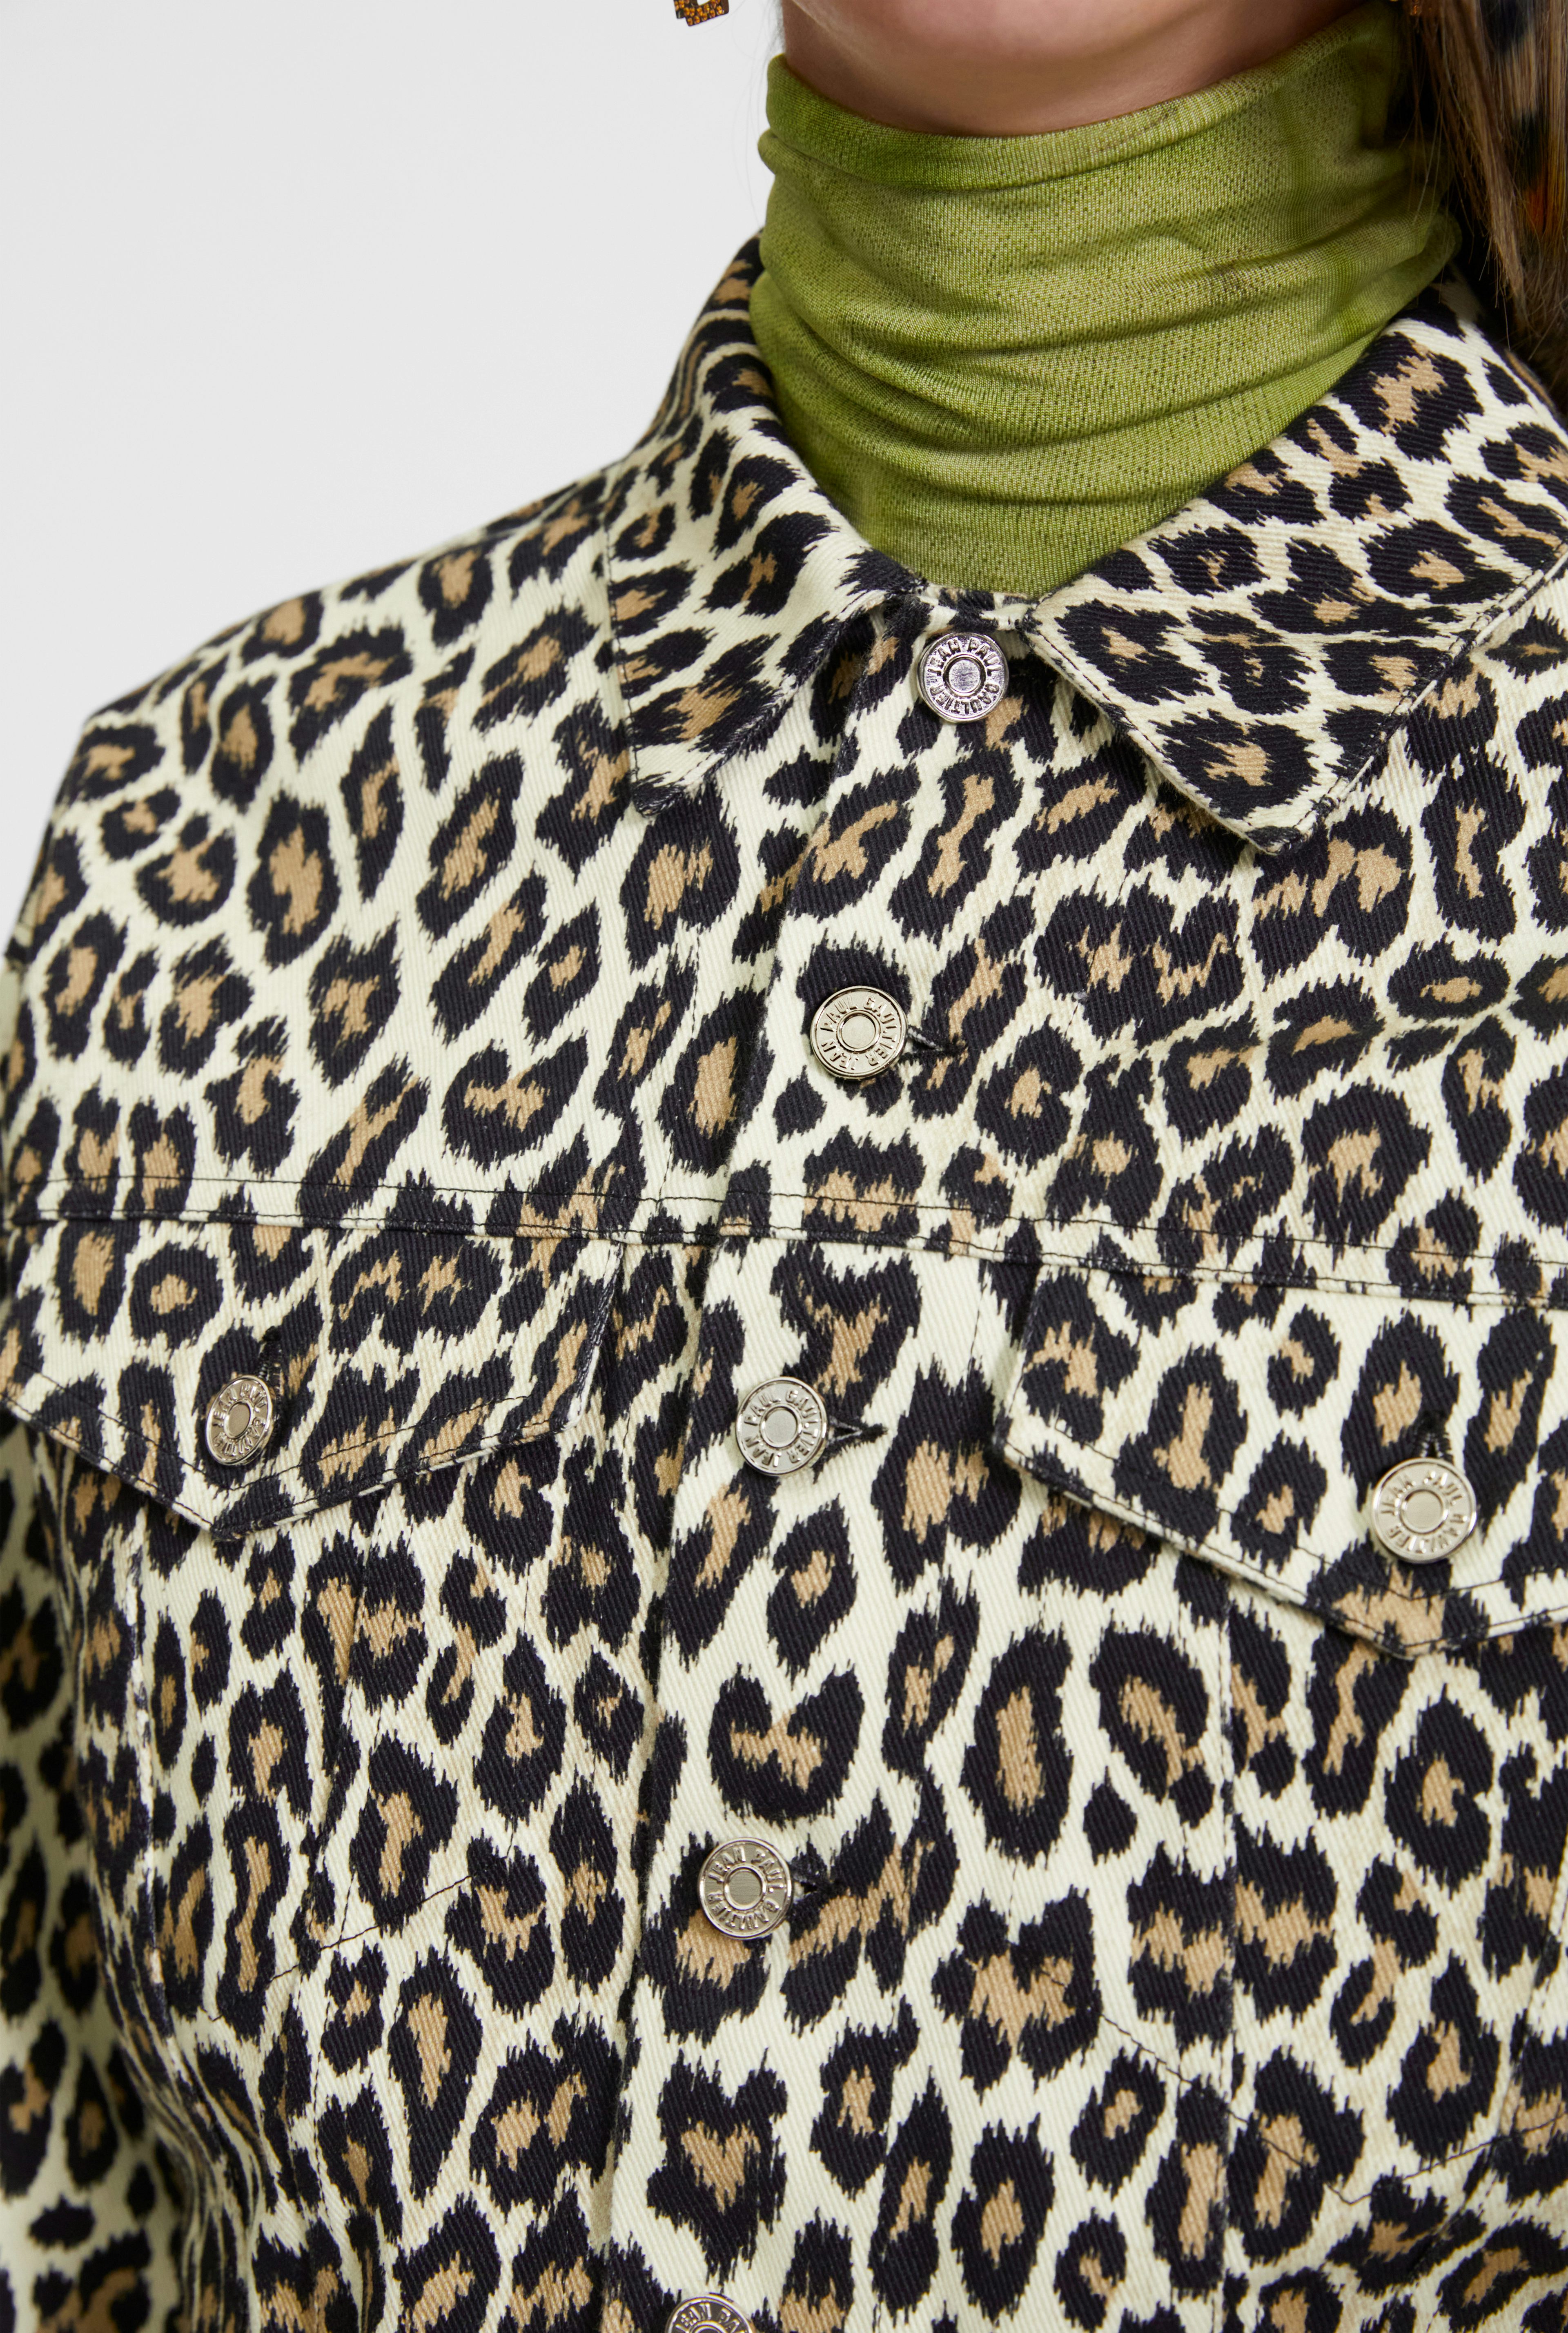 The Leopard jacket